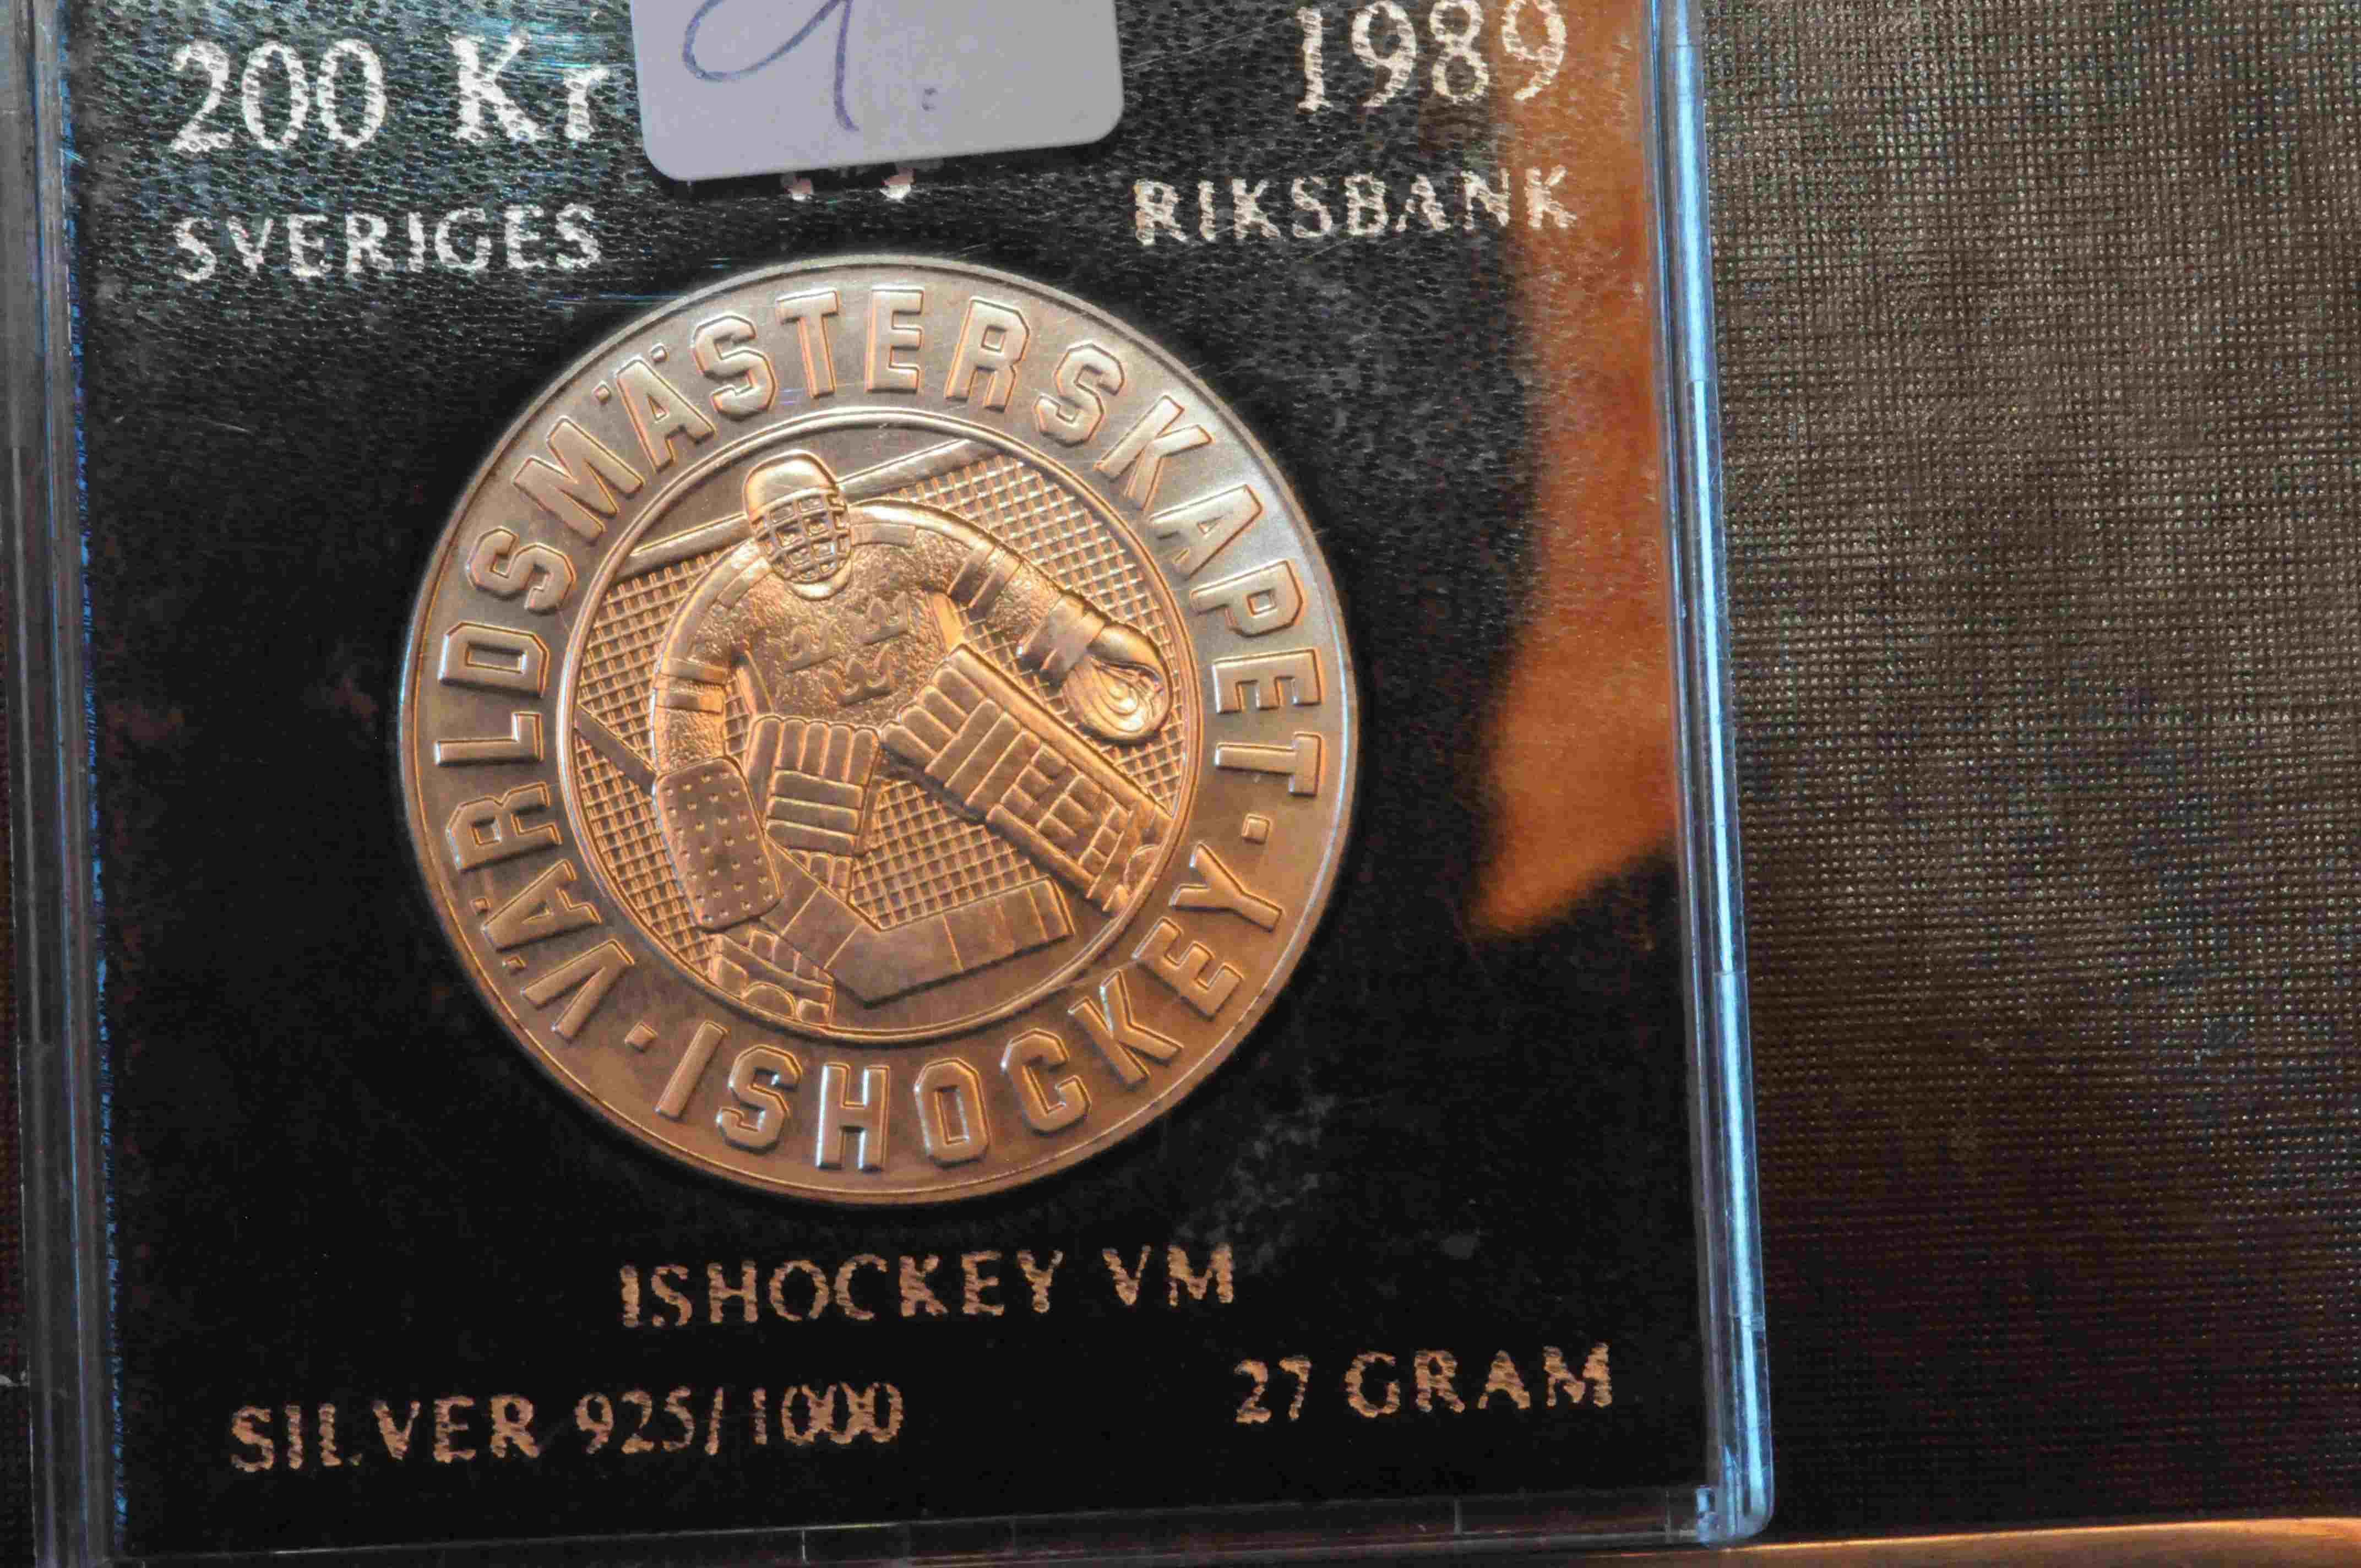 Sveriges rigsbank 200 kr 1989 Ishockey-VM sølv 925/1000